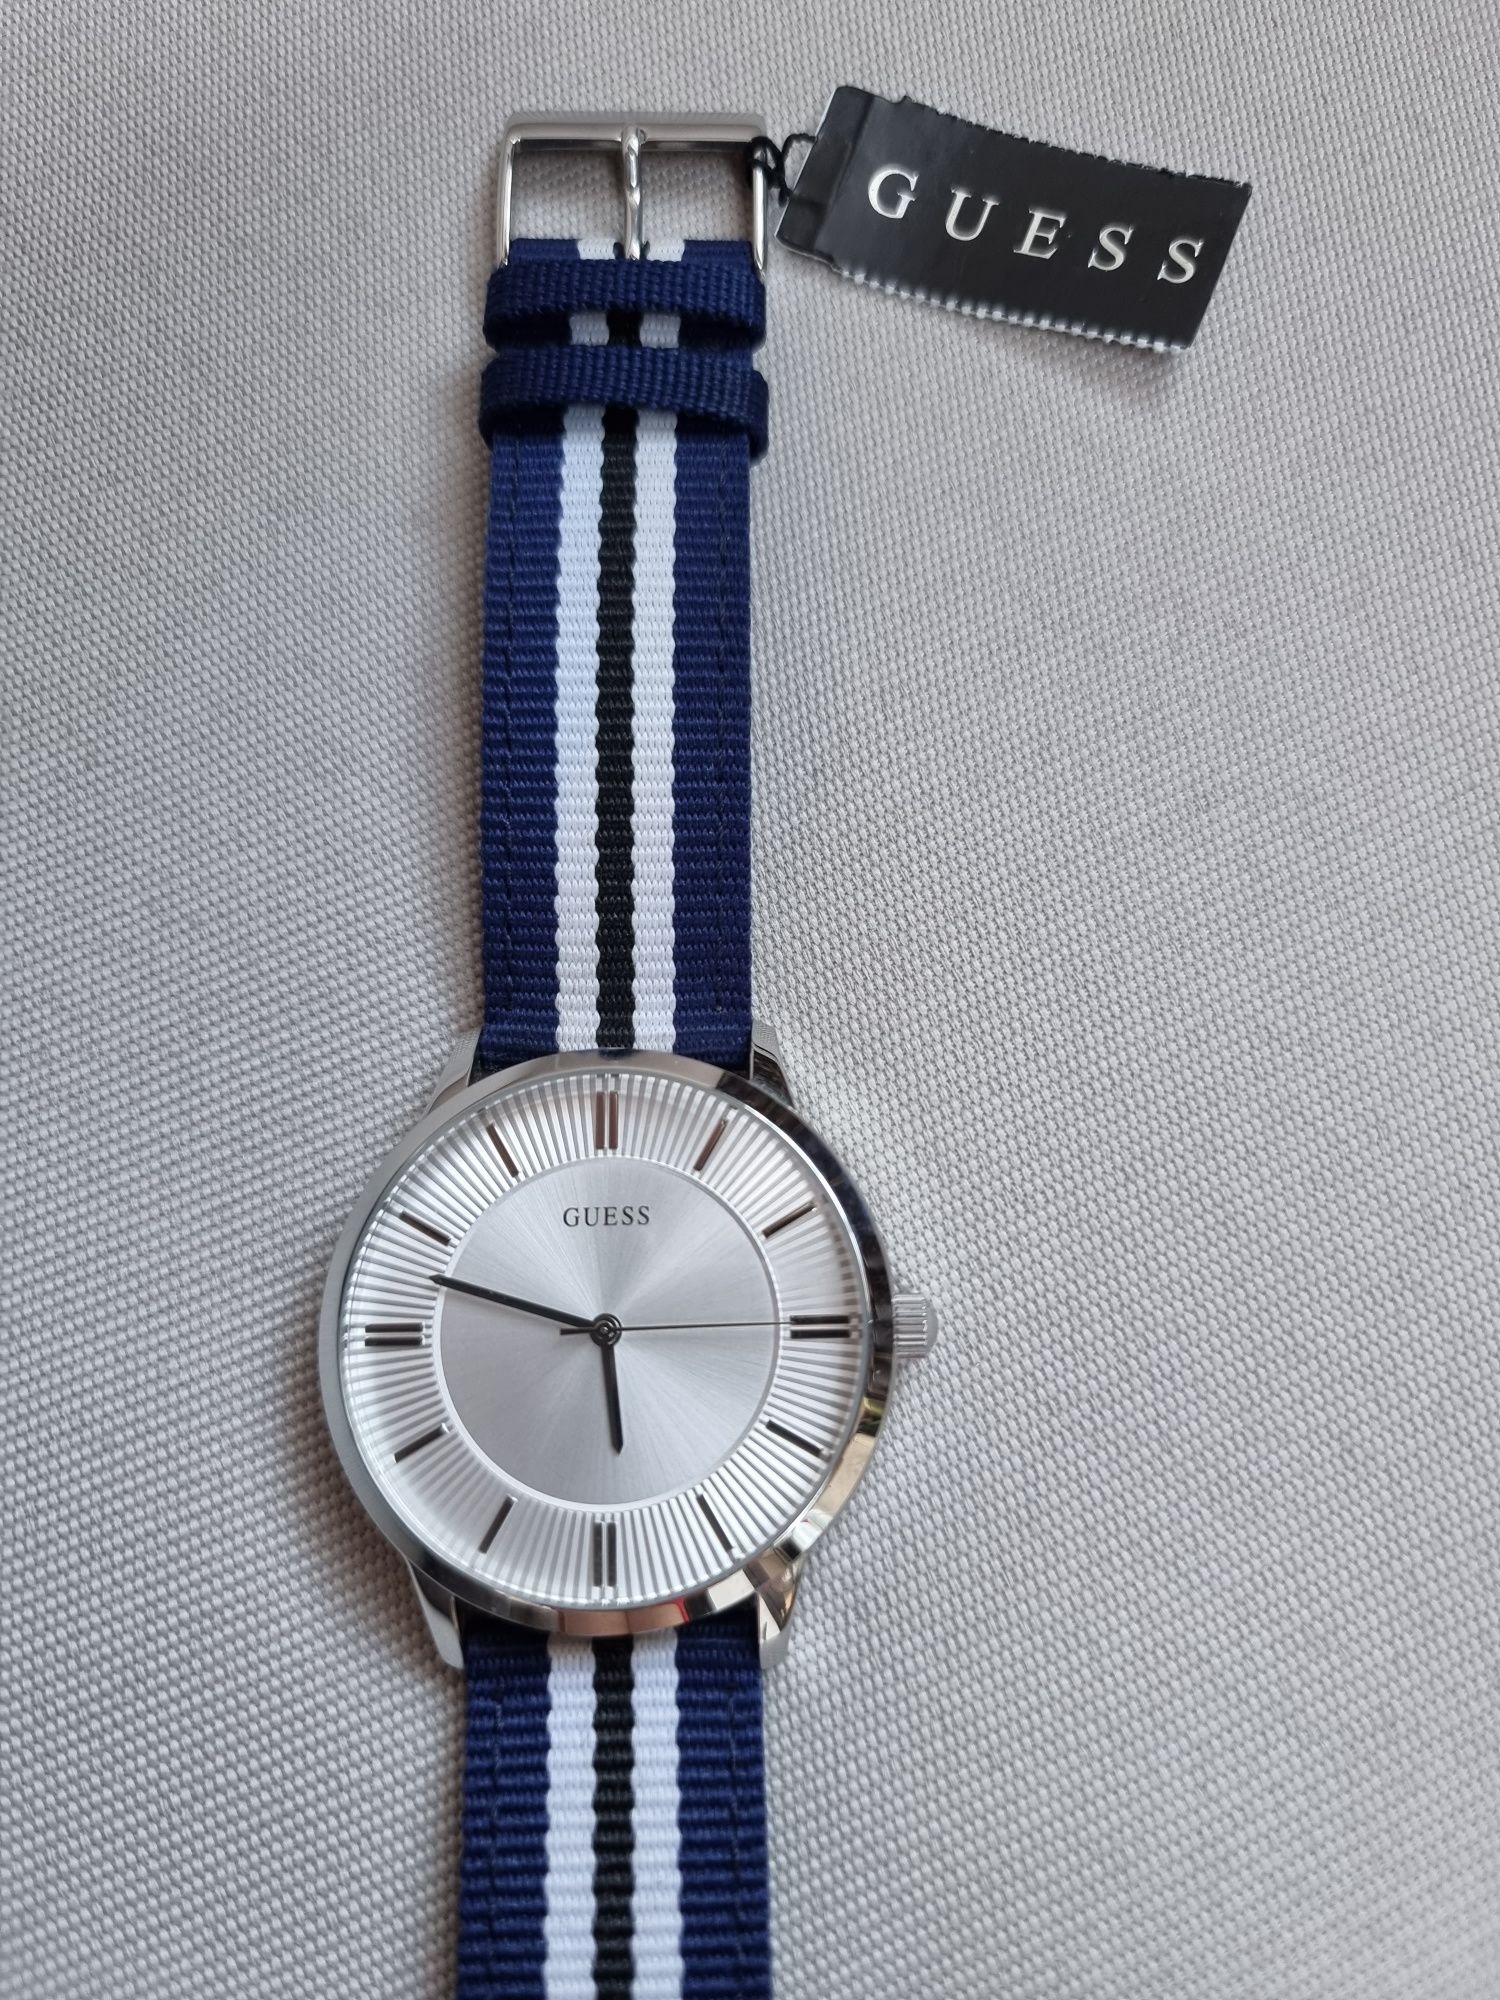 Męski klasyczny zegarek Guess srebrny biały pasek